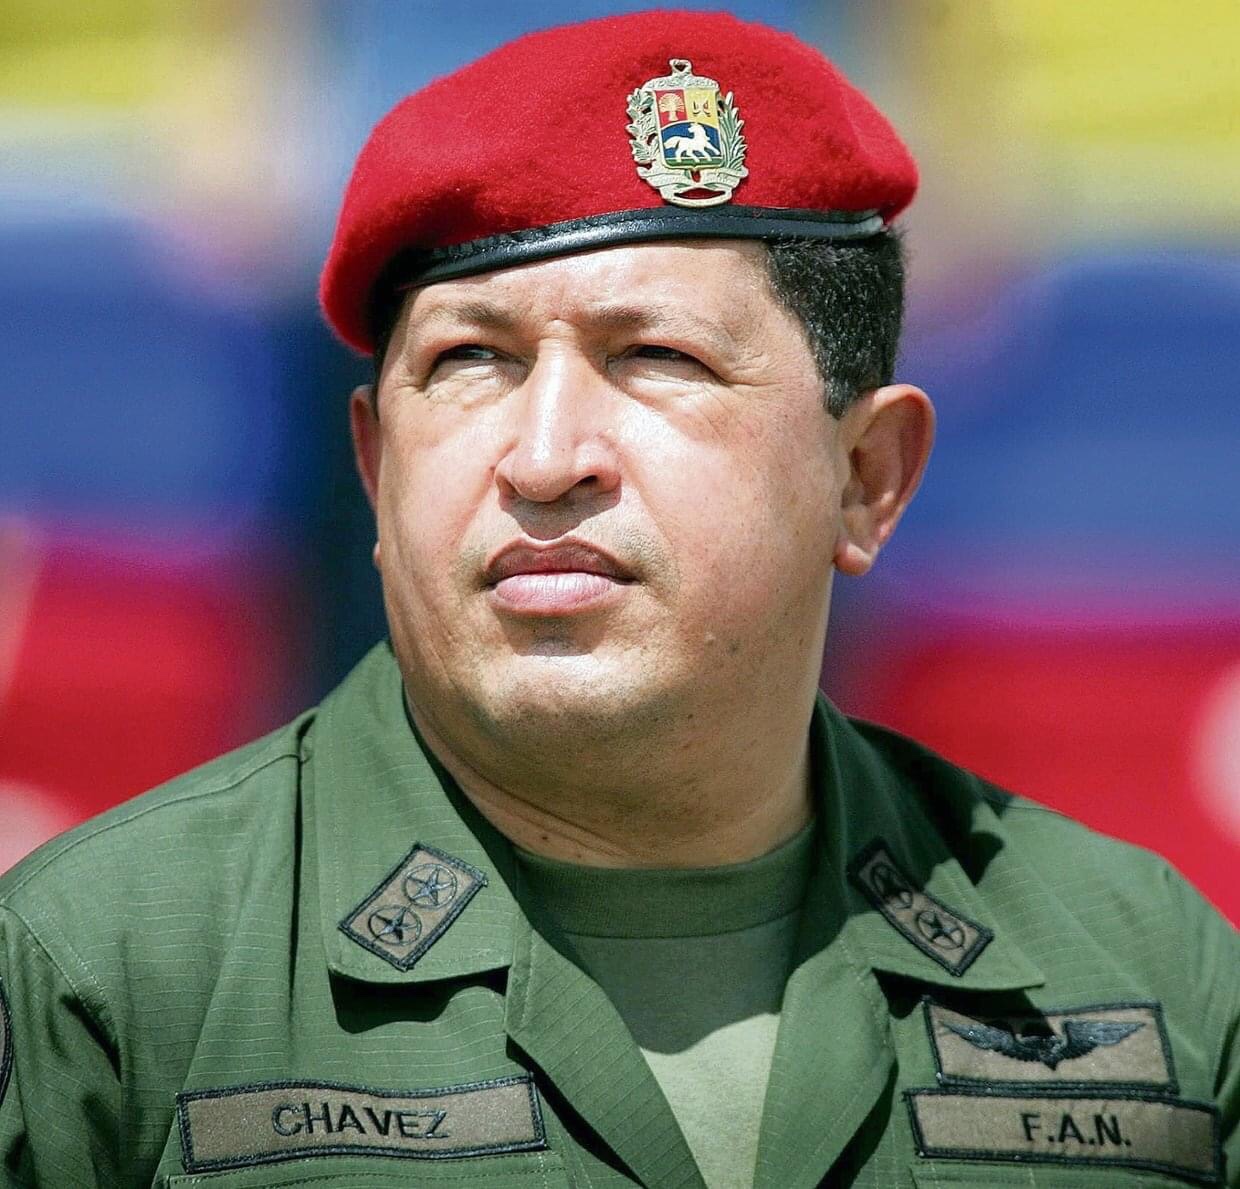 L’ex presidente venezuelano Hugo Chavez